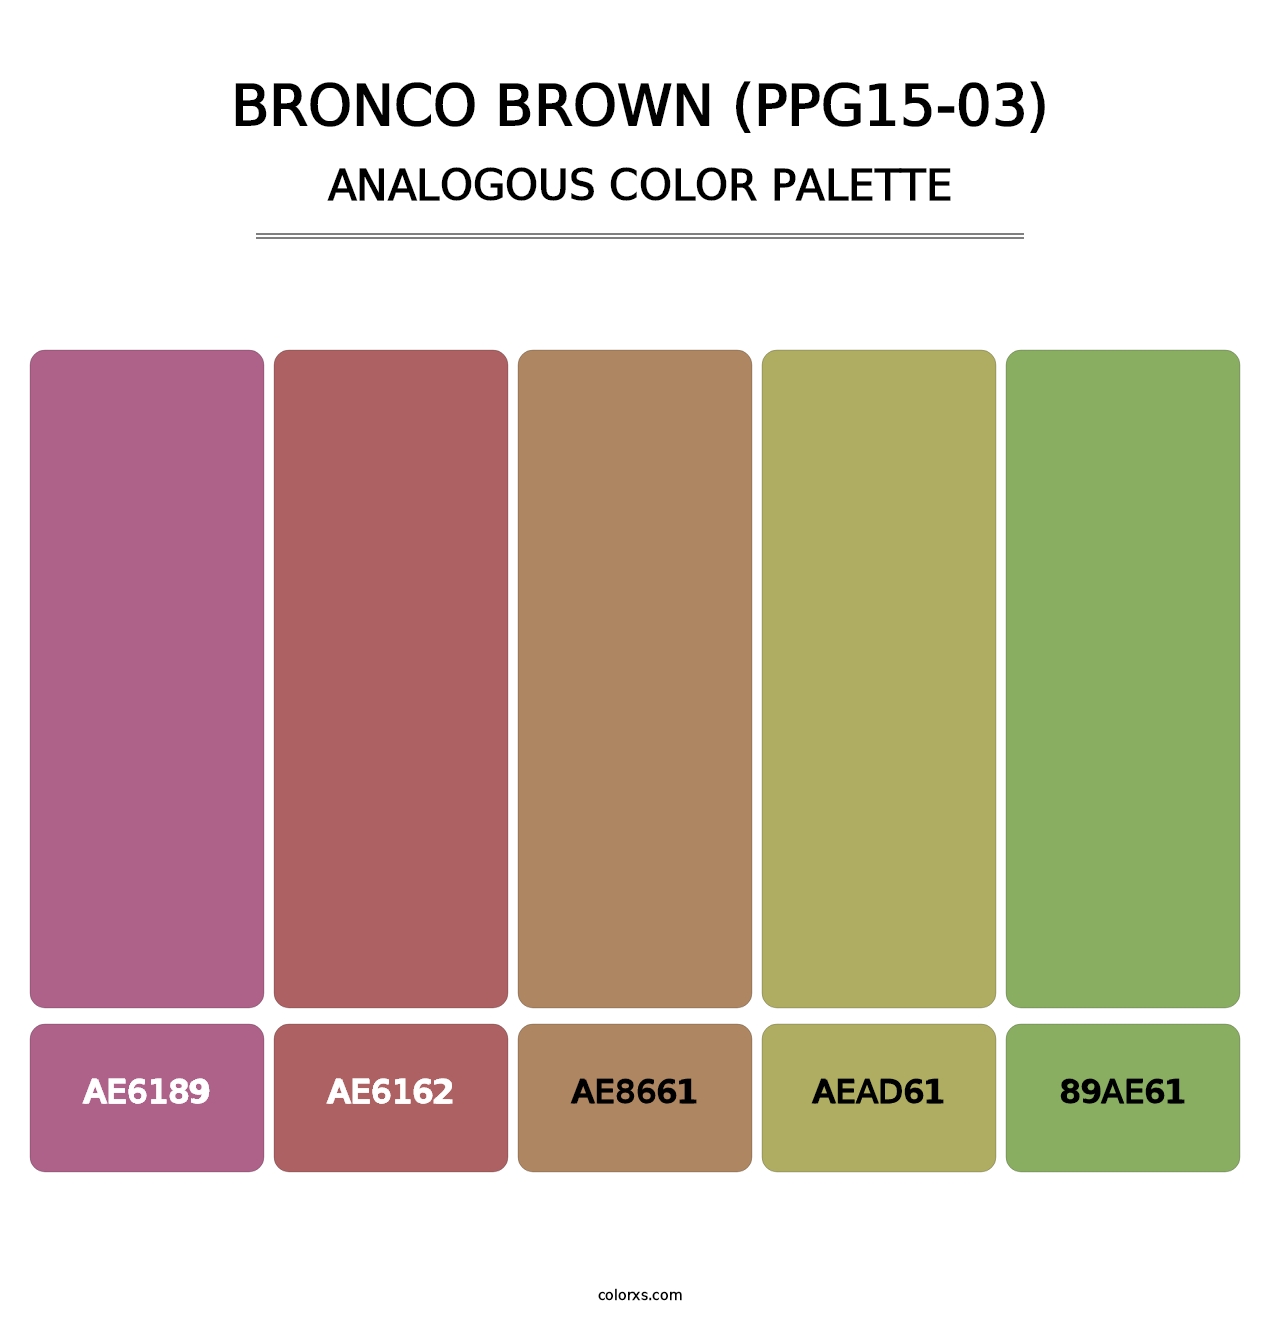 Bronco Brown (PPG15-03) - Analogous Color Palette